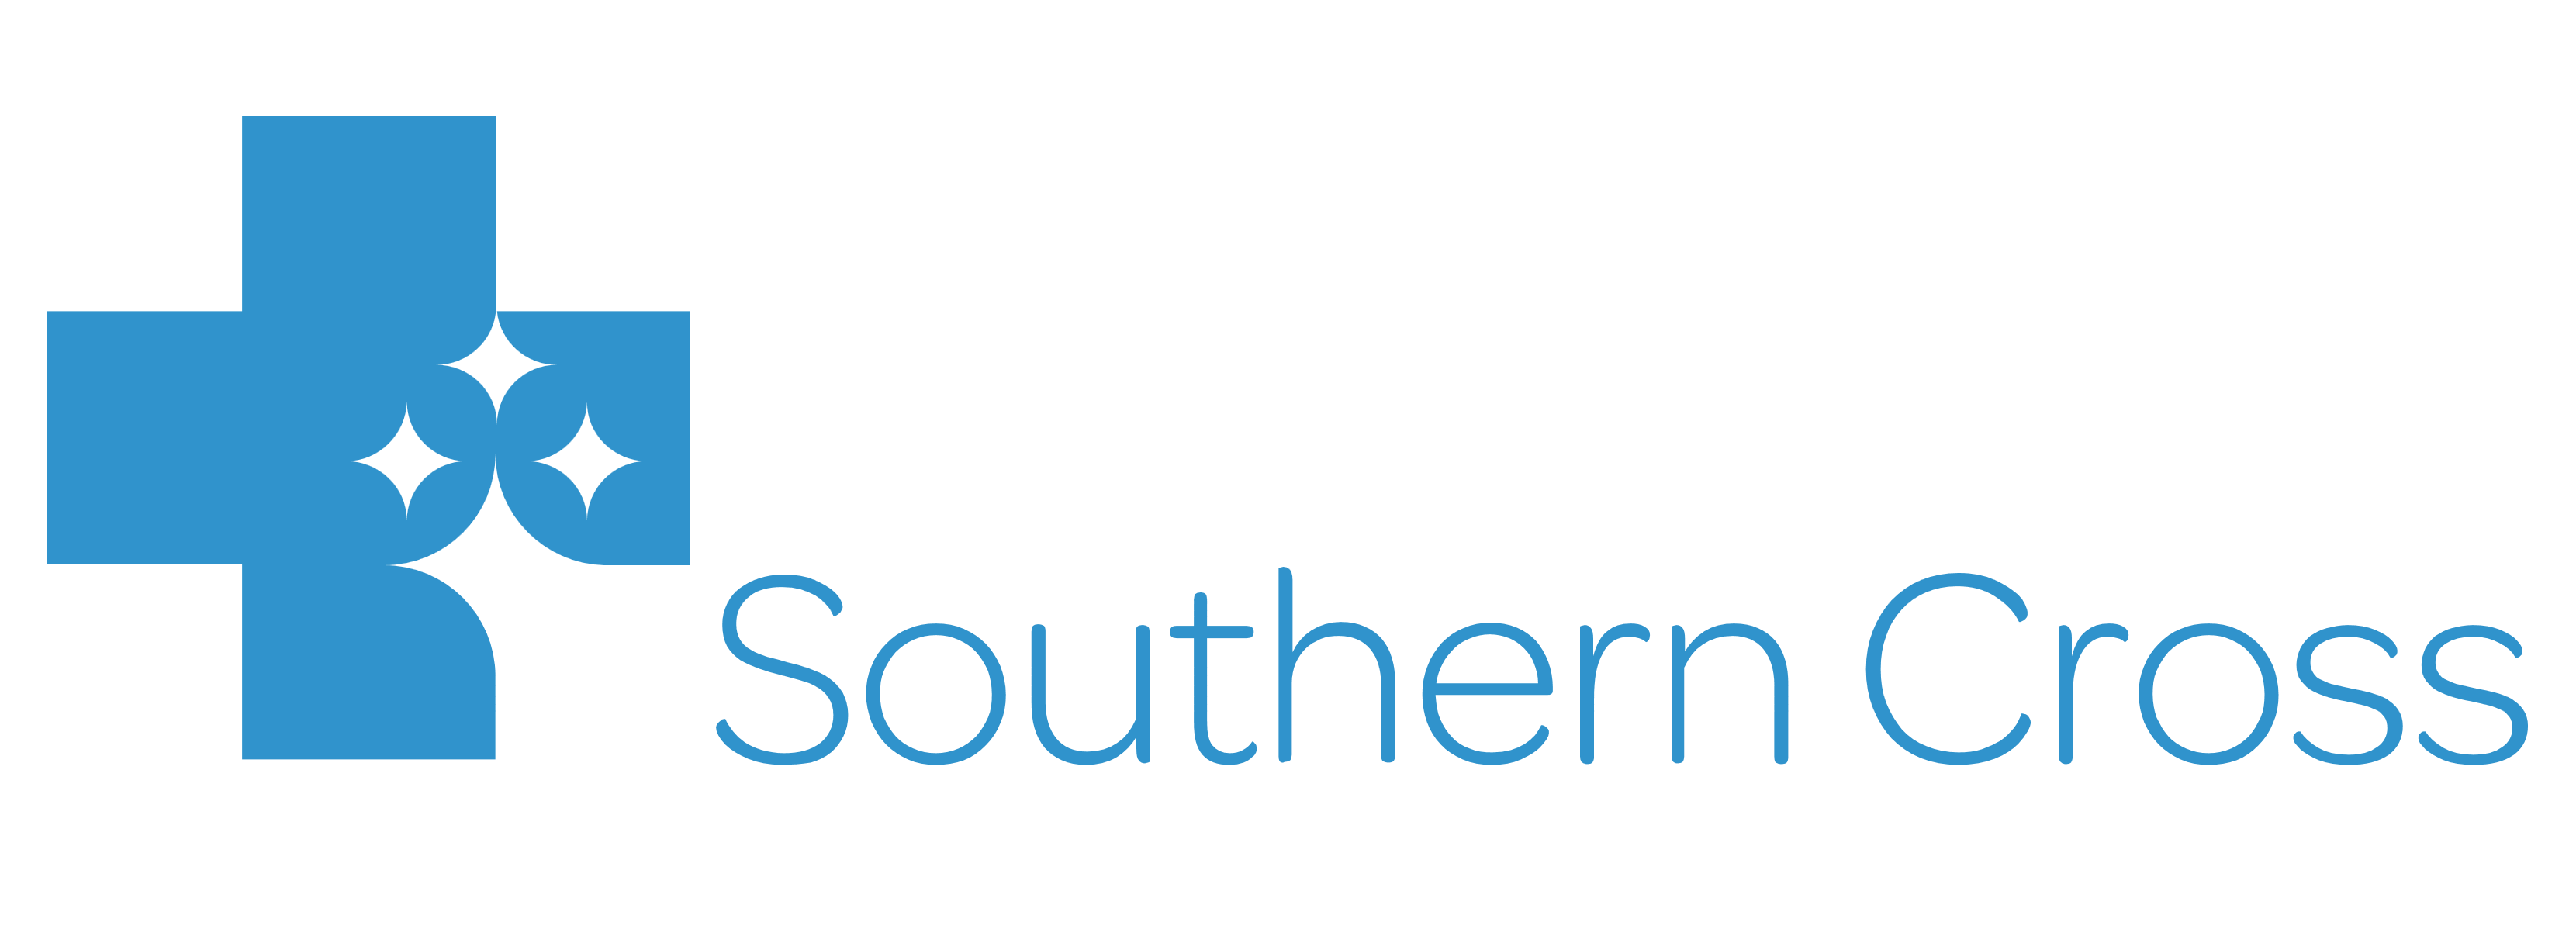 Southern Cross logo, logotype